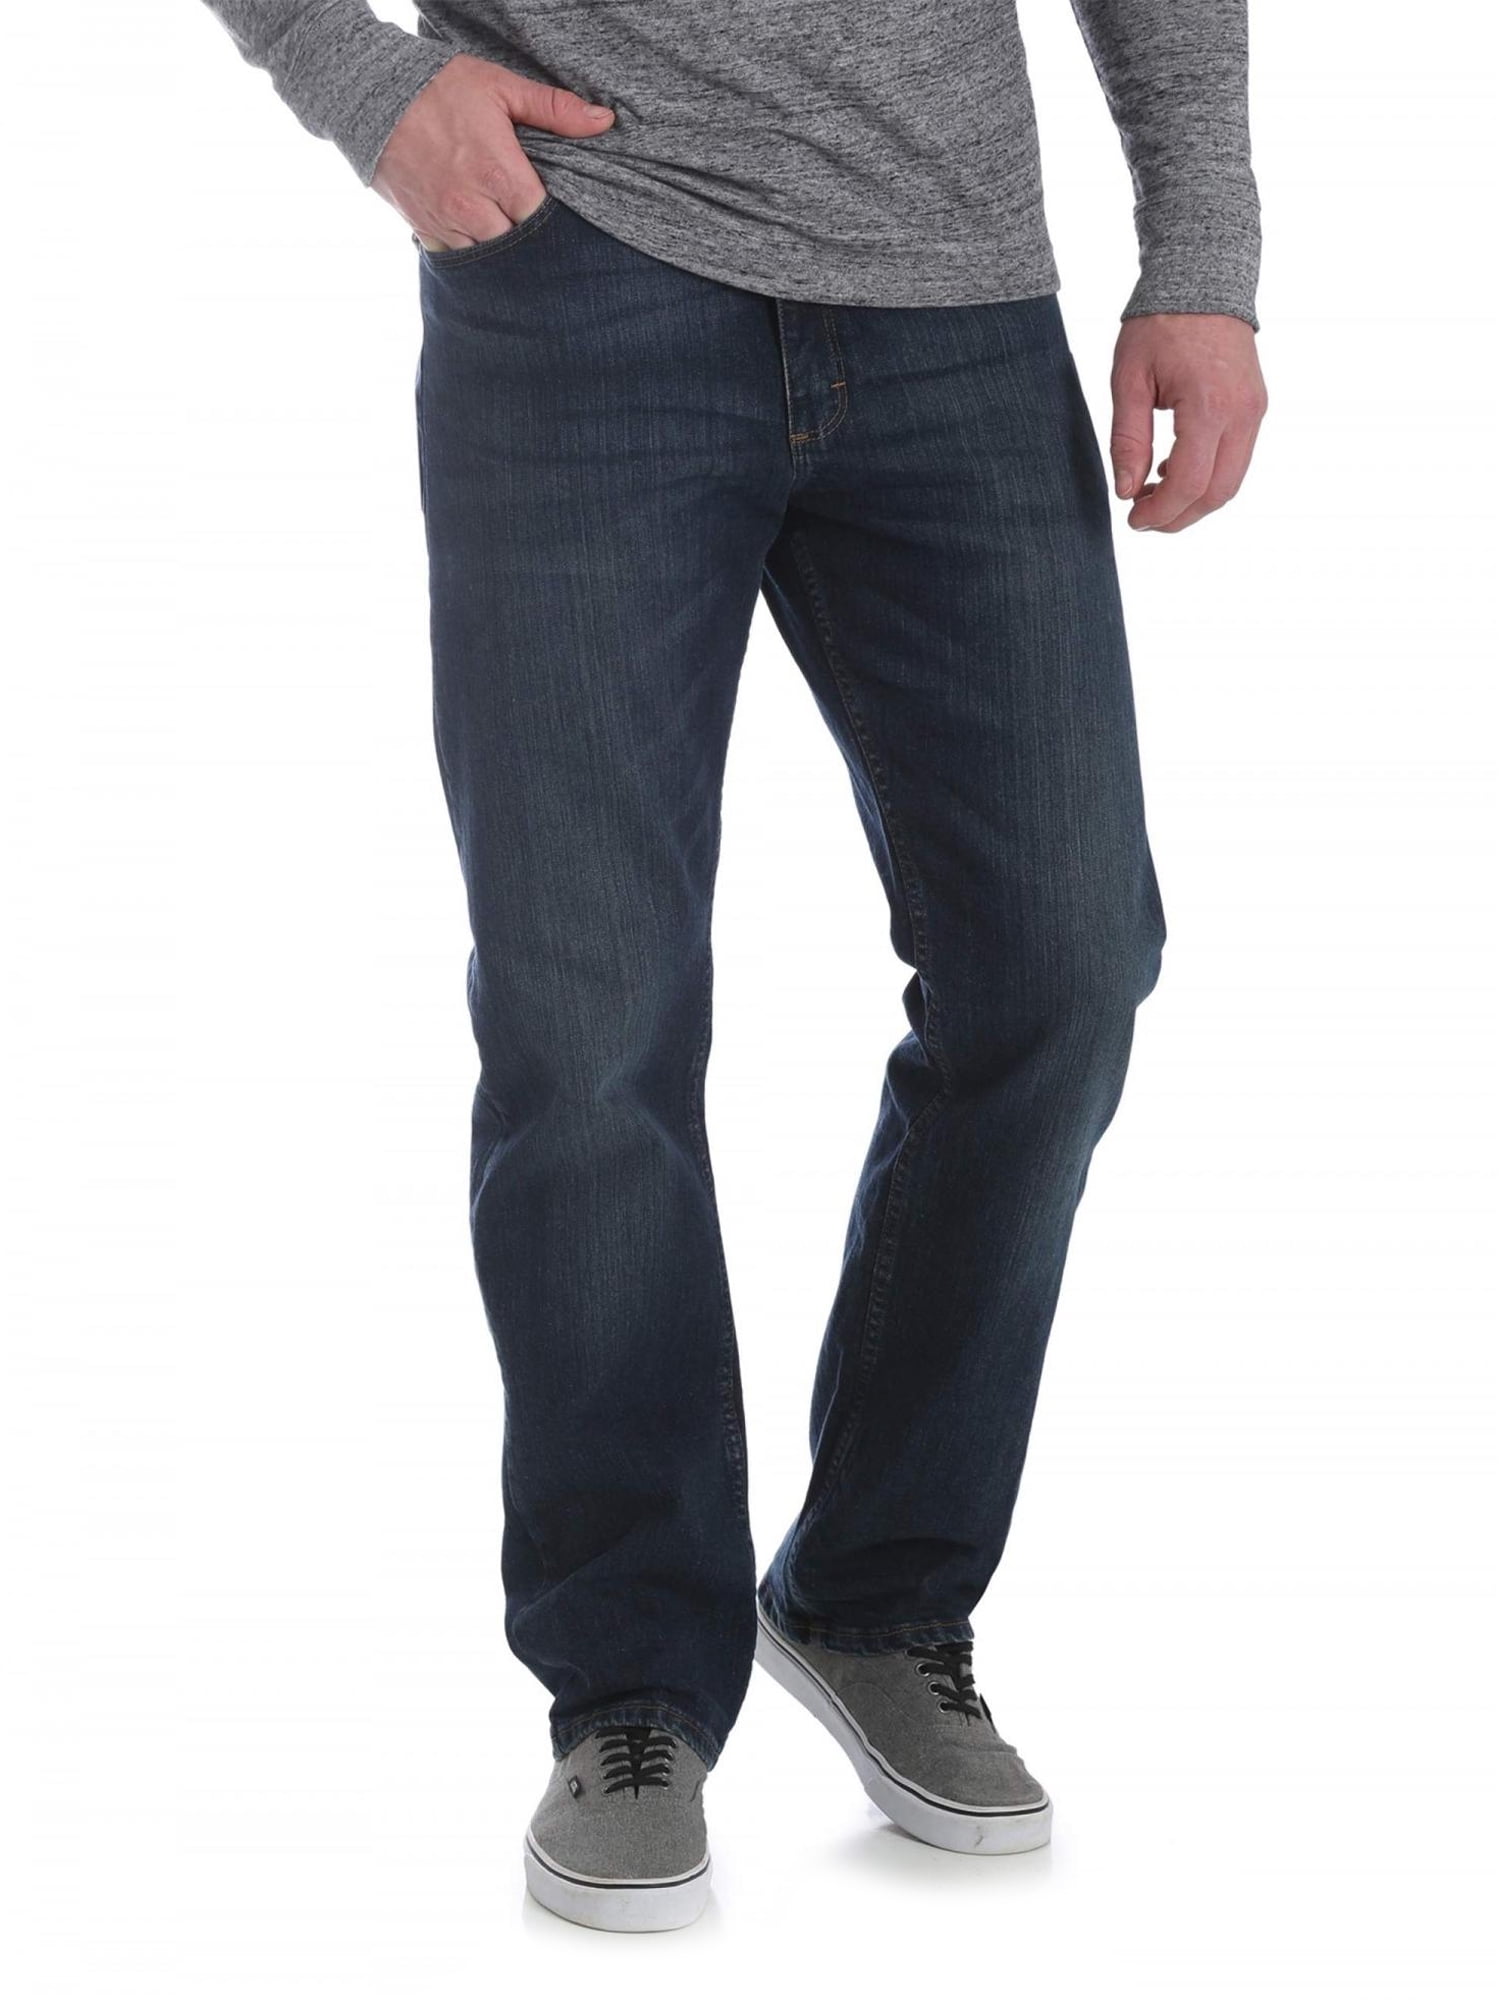 Multiple Sizes NWT Men's Wrangler Jeans Athletic  Fit Darkest Indigo 